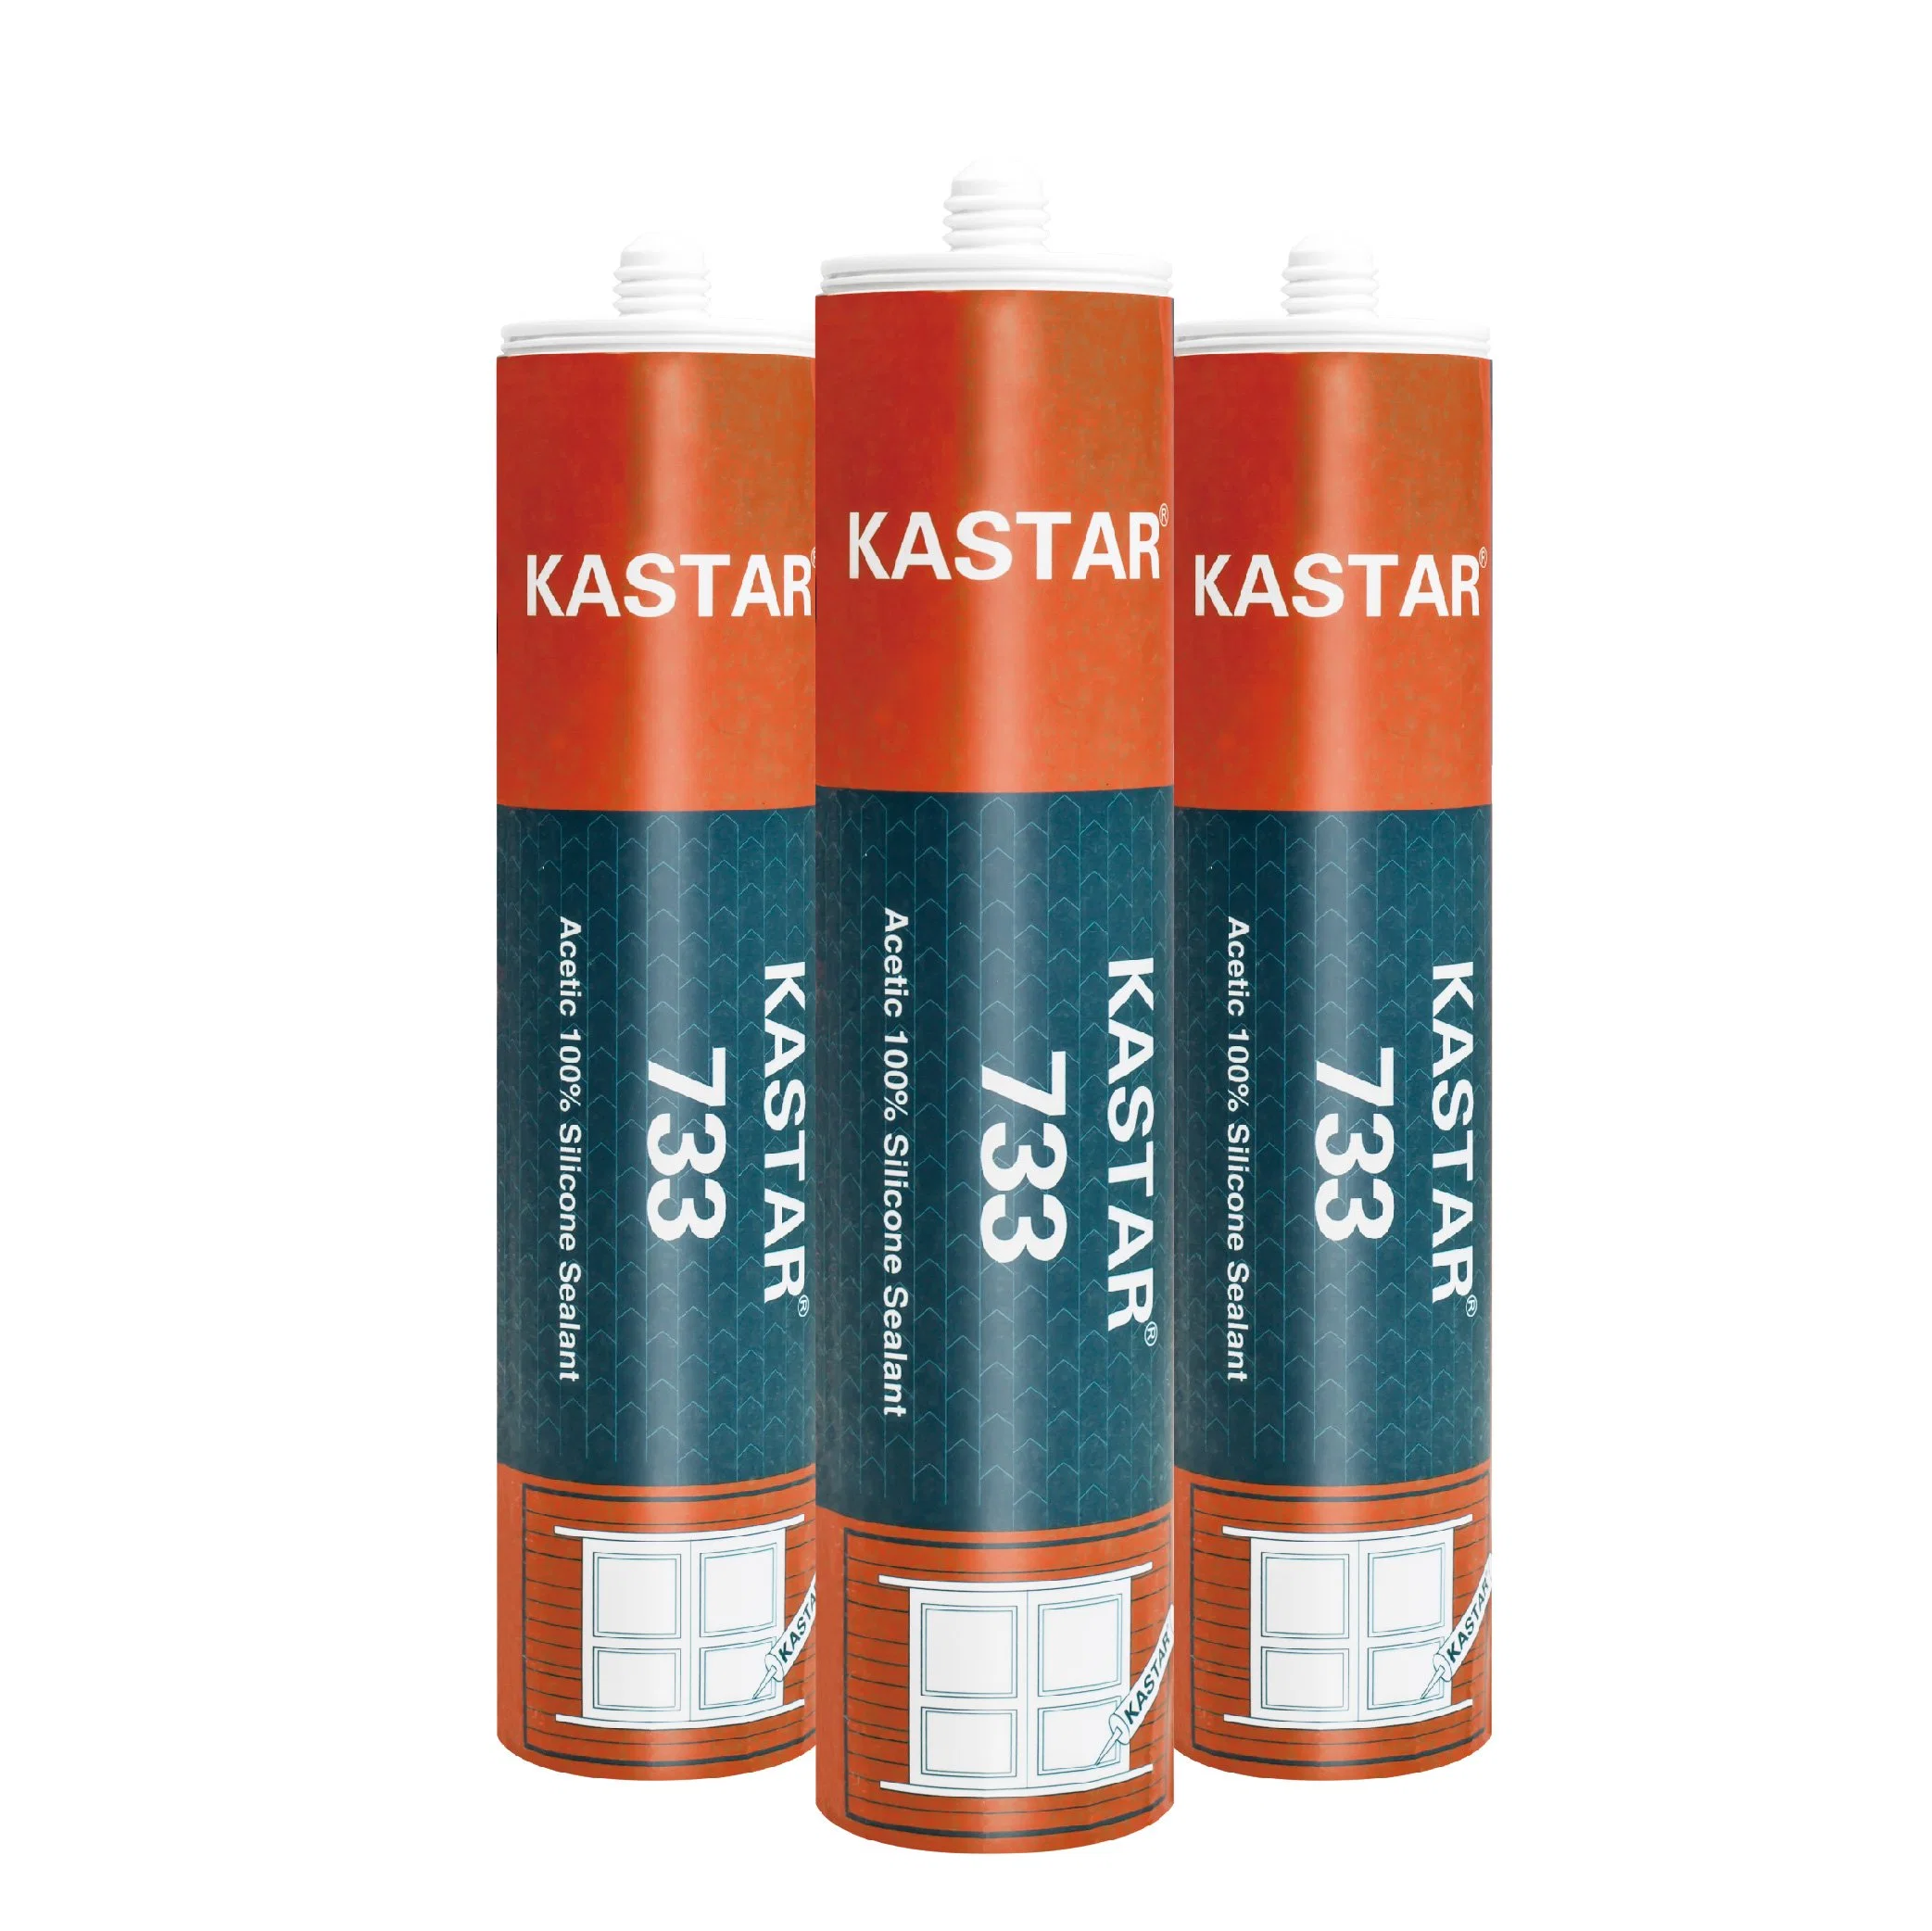 Kastar 730 Gp Acetoxy Silicone Sealant pour usage général